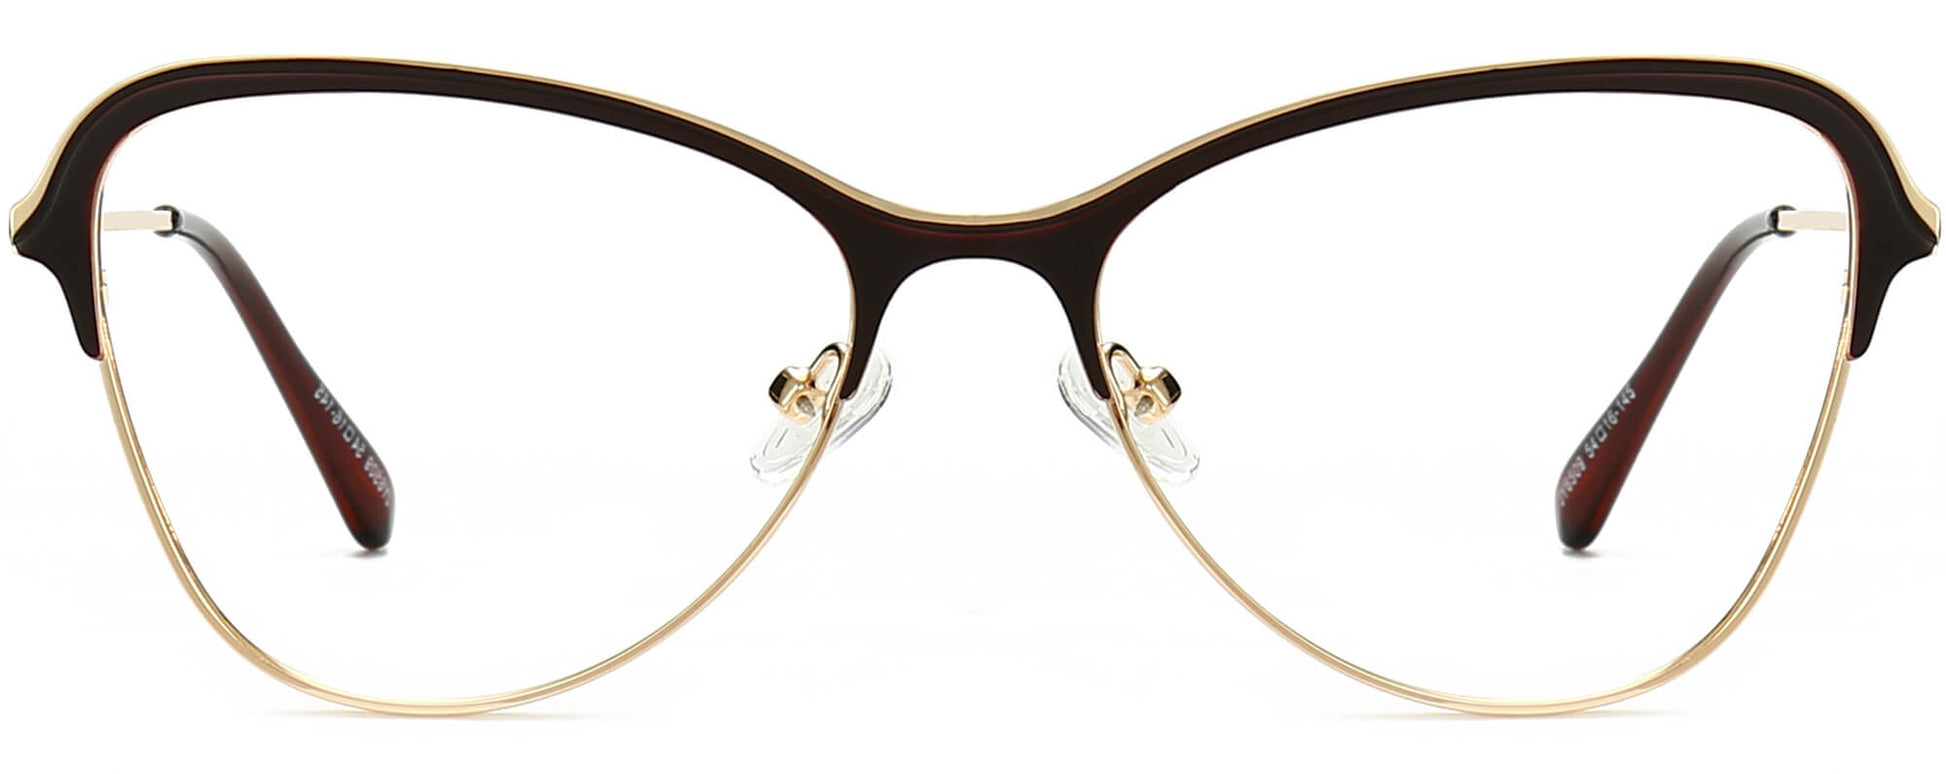 Daring Cateye Black Eyeglasses from ANRRI, front view